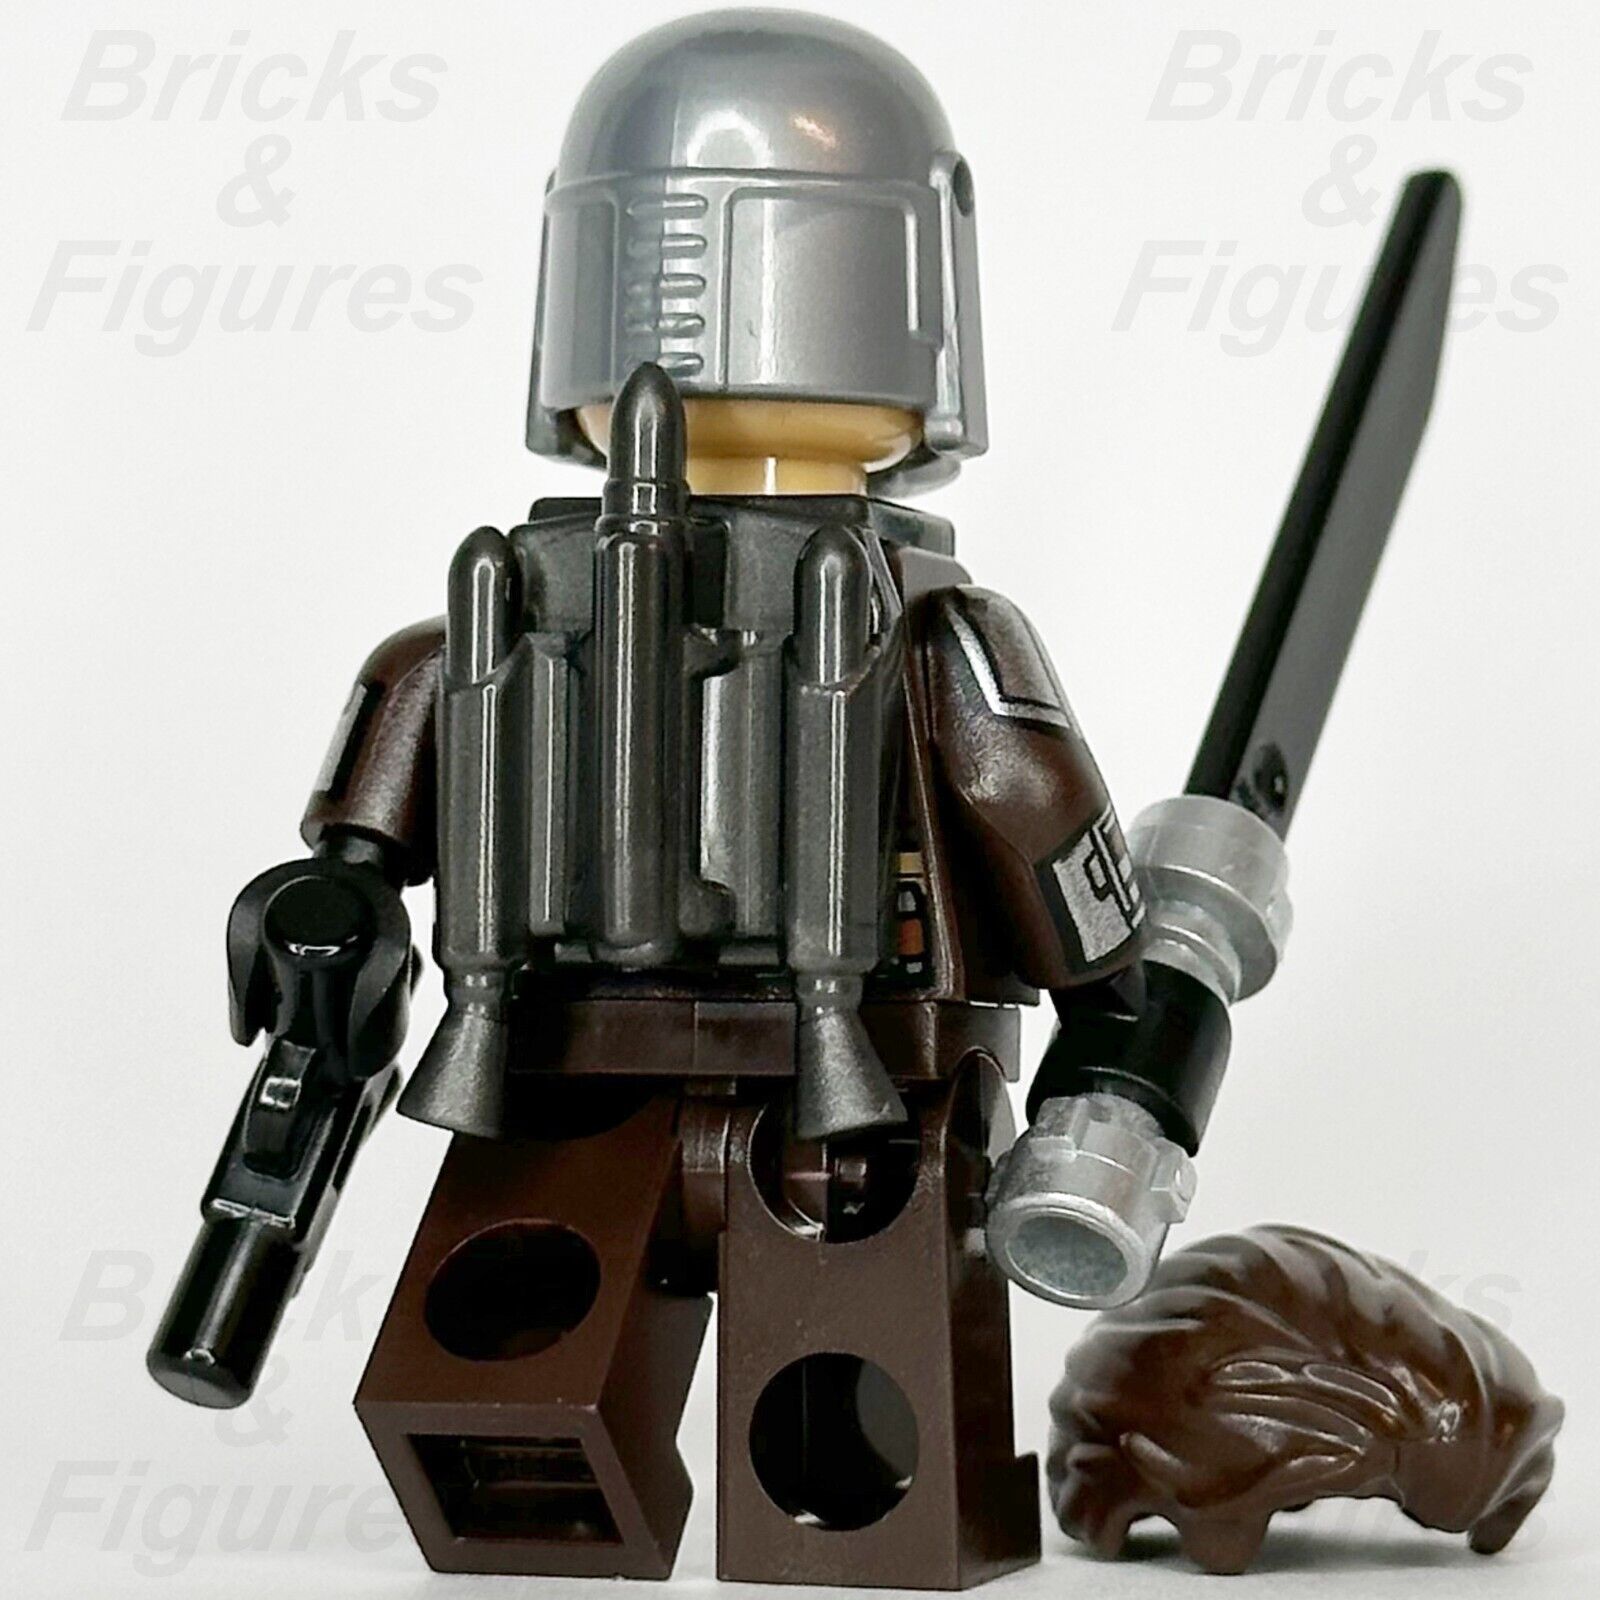 LEGO Star Wars Din Djarin Minifigure The Mandalorian Darksaber 75361 sw1258